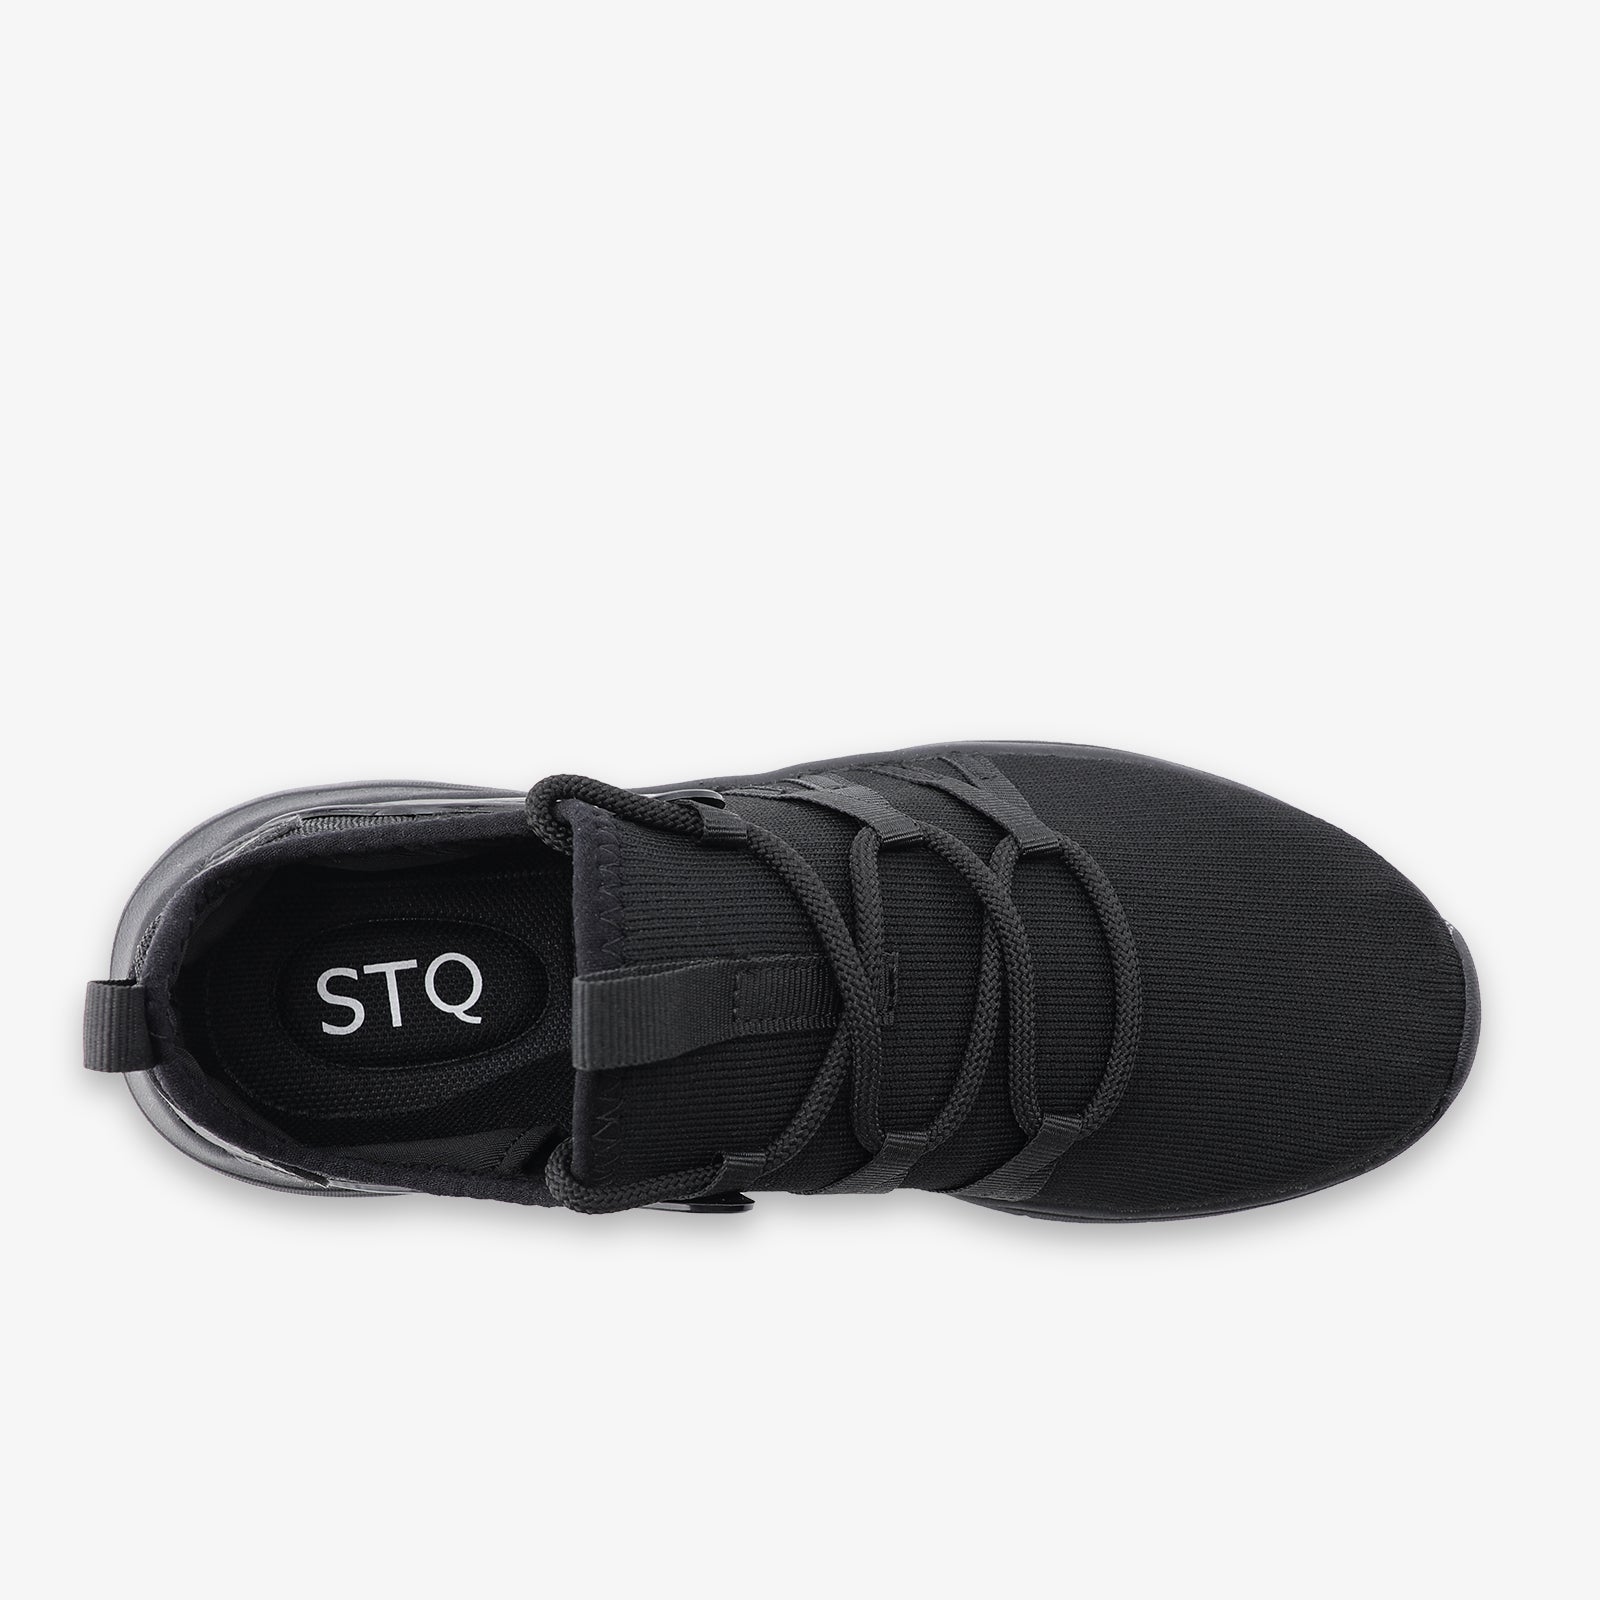 stq-fashion-sneakers-running-shoes-view